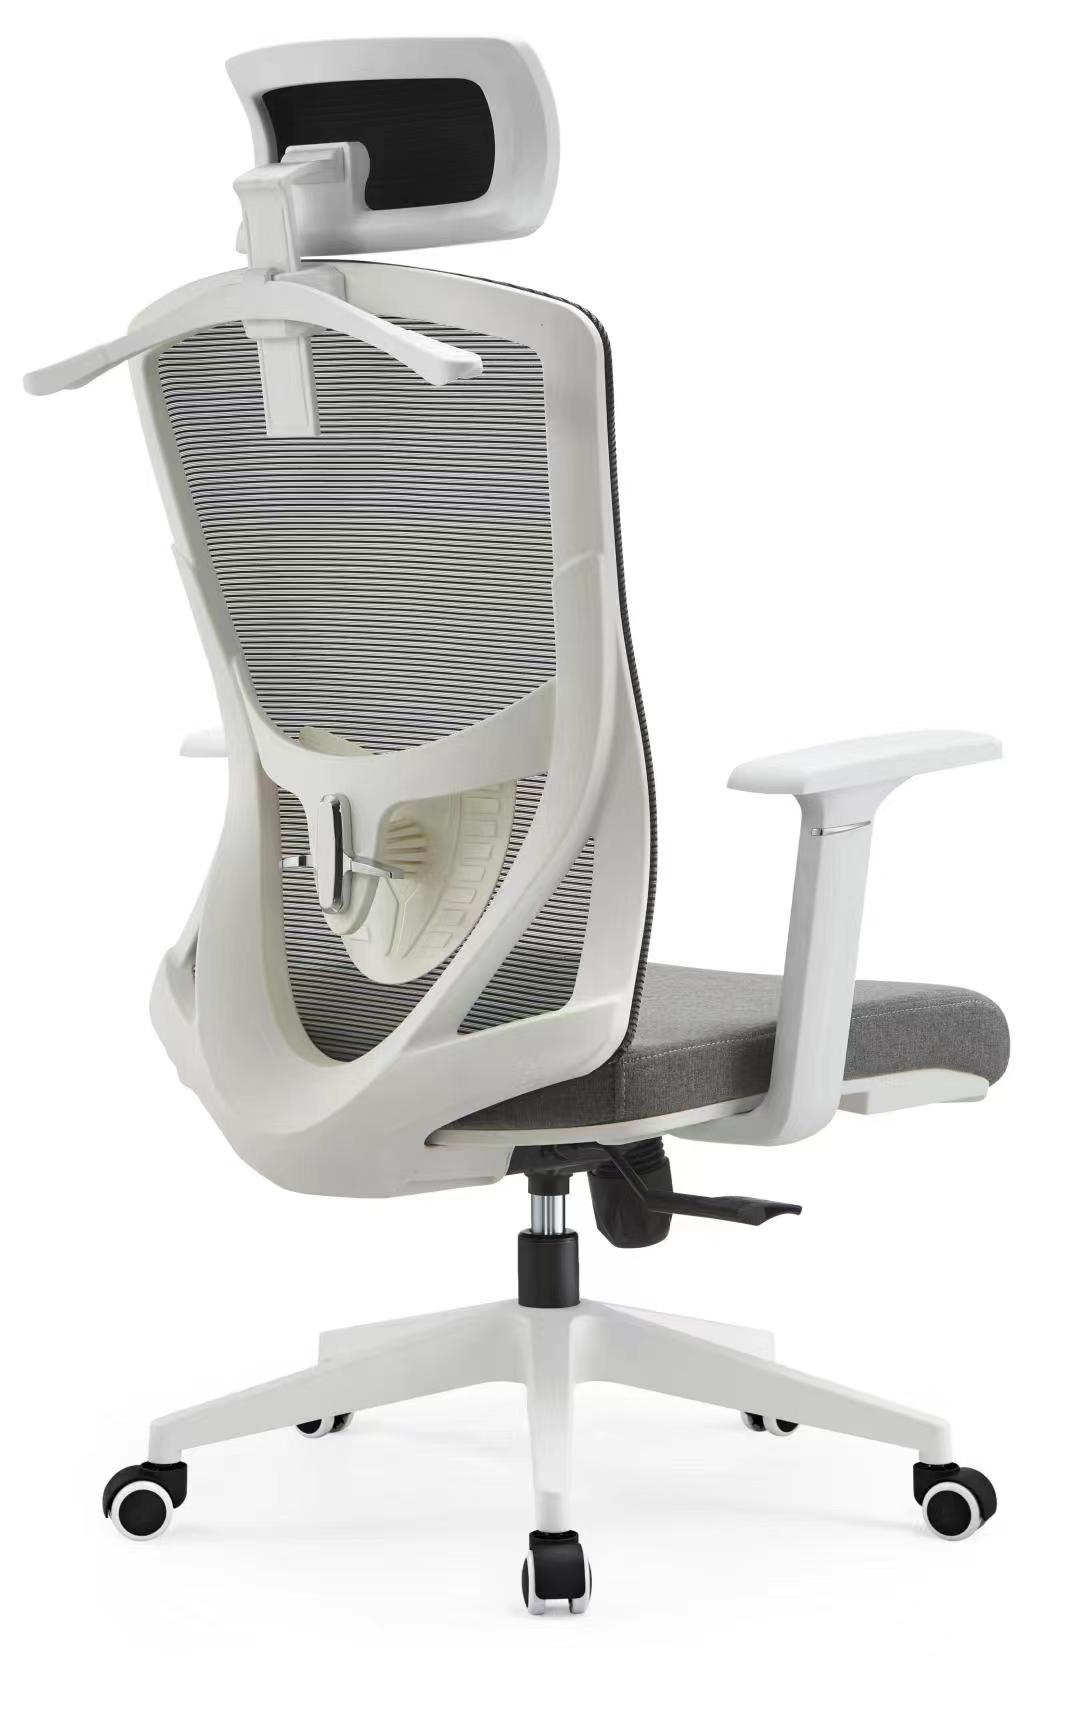 70 -Executive Full Option Chair - White